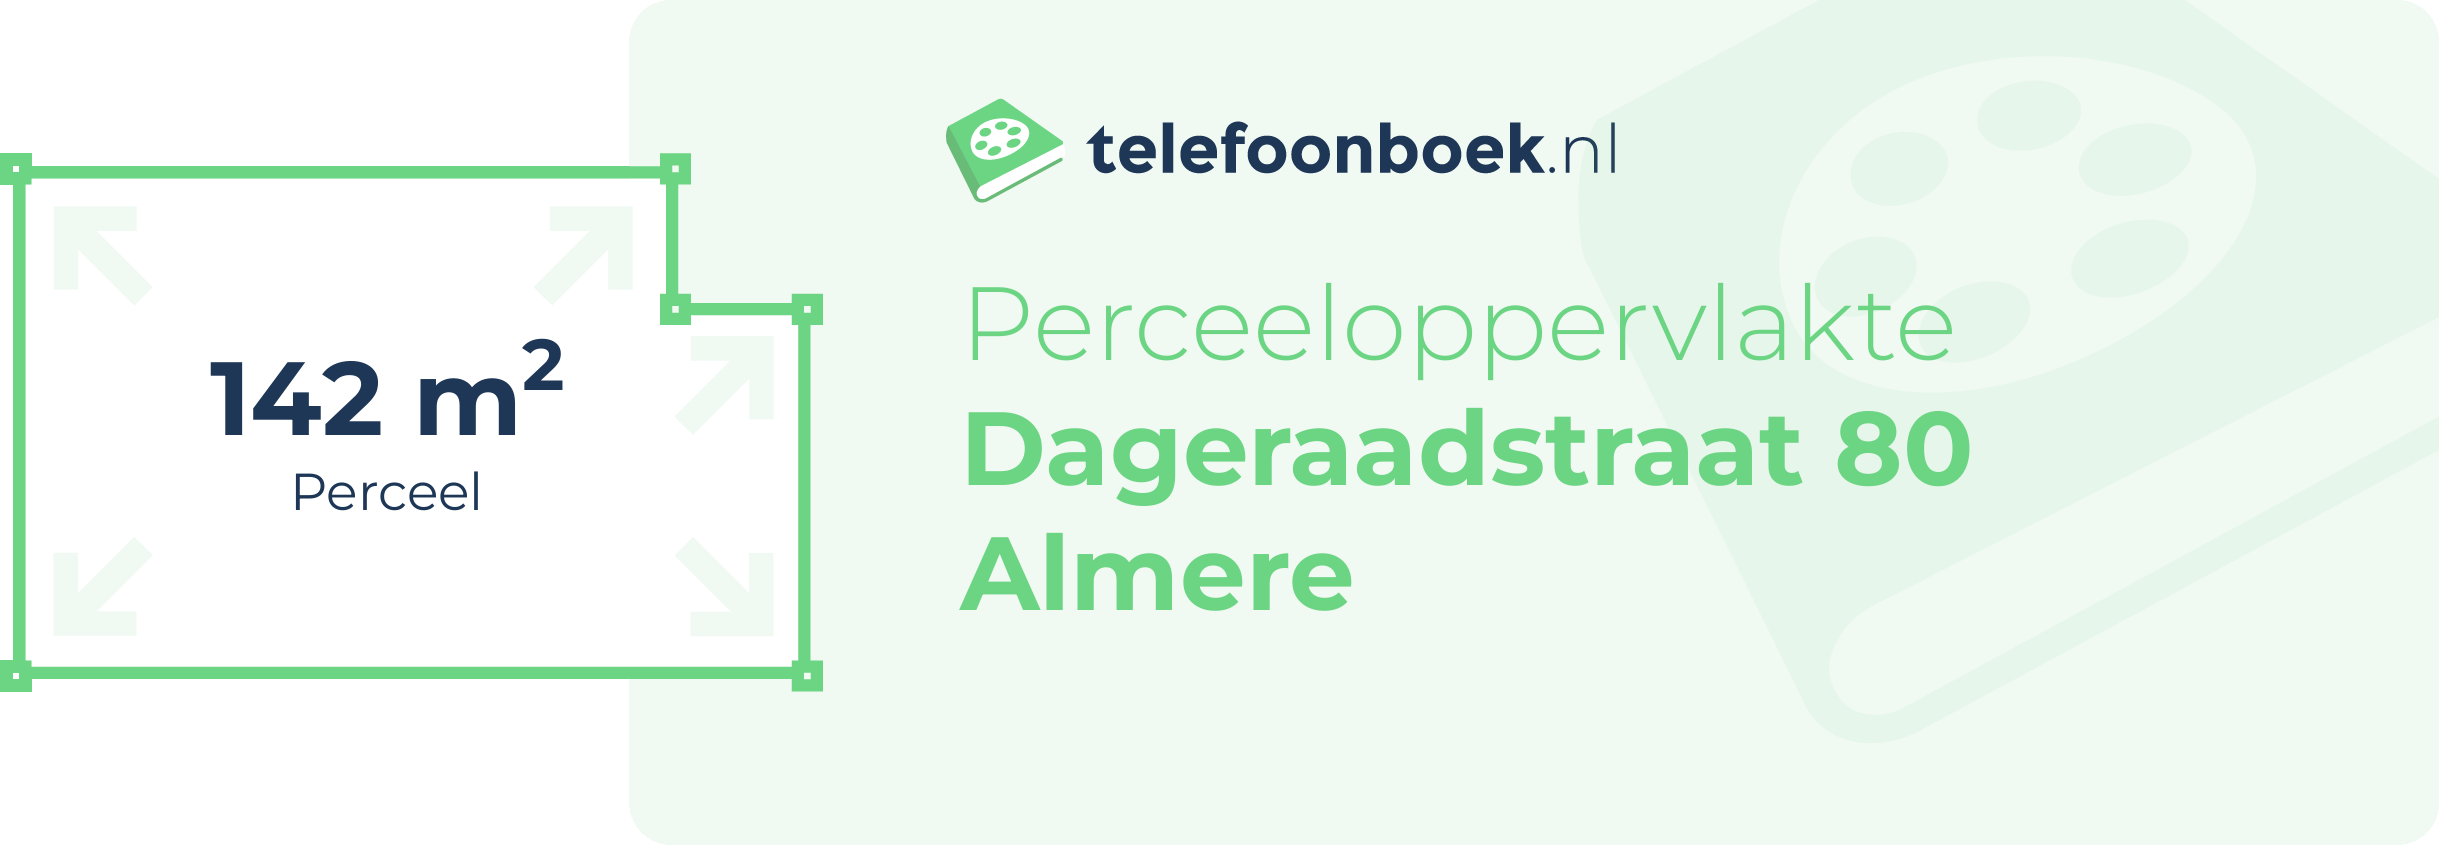 Perceeloppervlakte Dageraadstraat 80 Almere